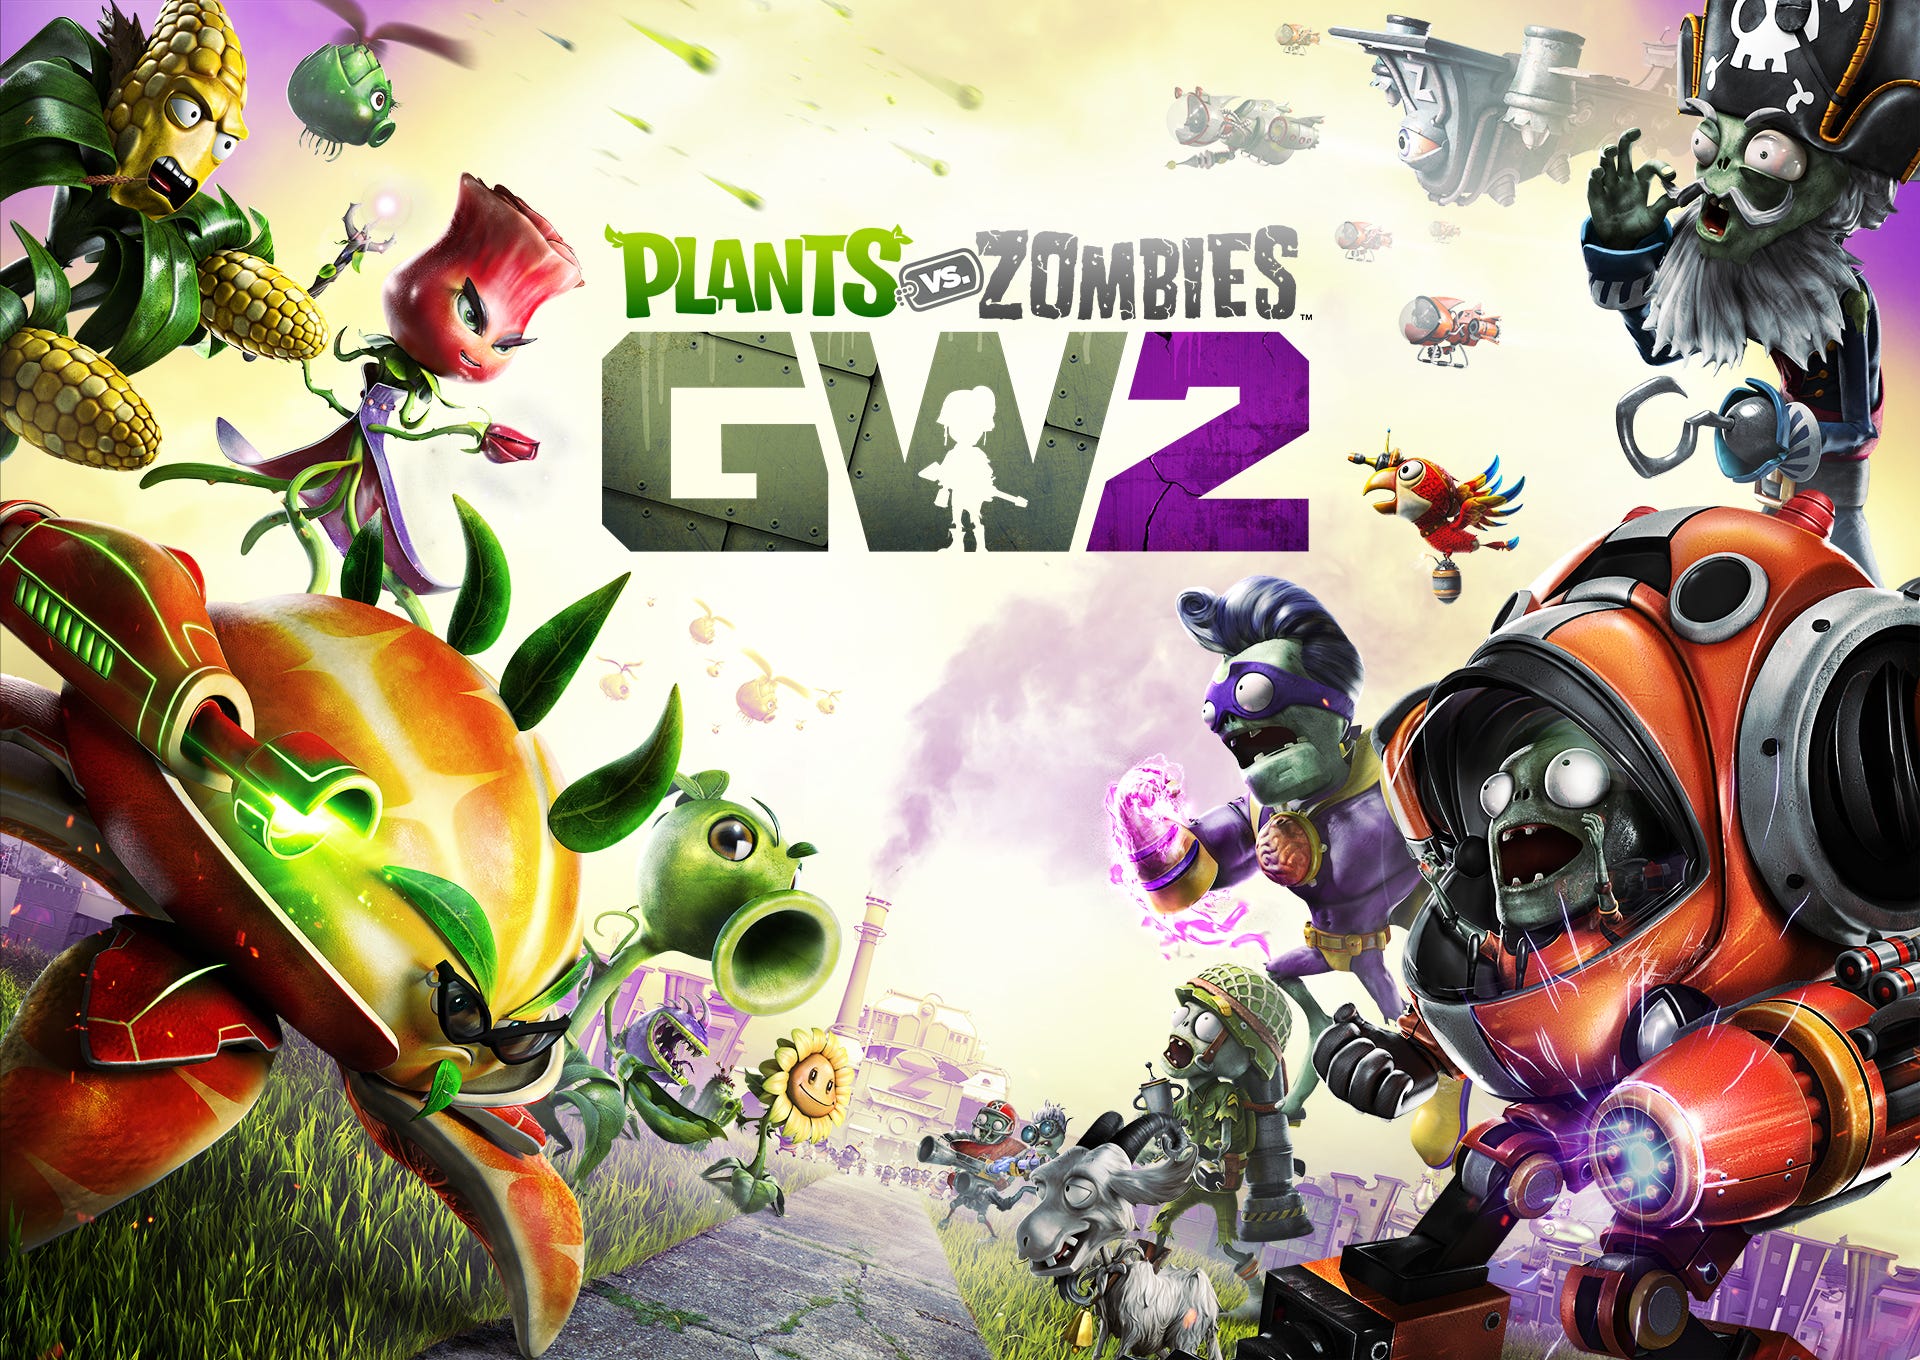 Garden Ops and Graveyard Ops - Plants vs. Zombies: Garden Warfare